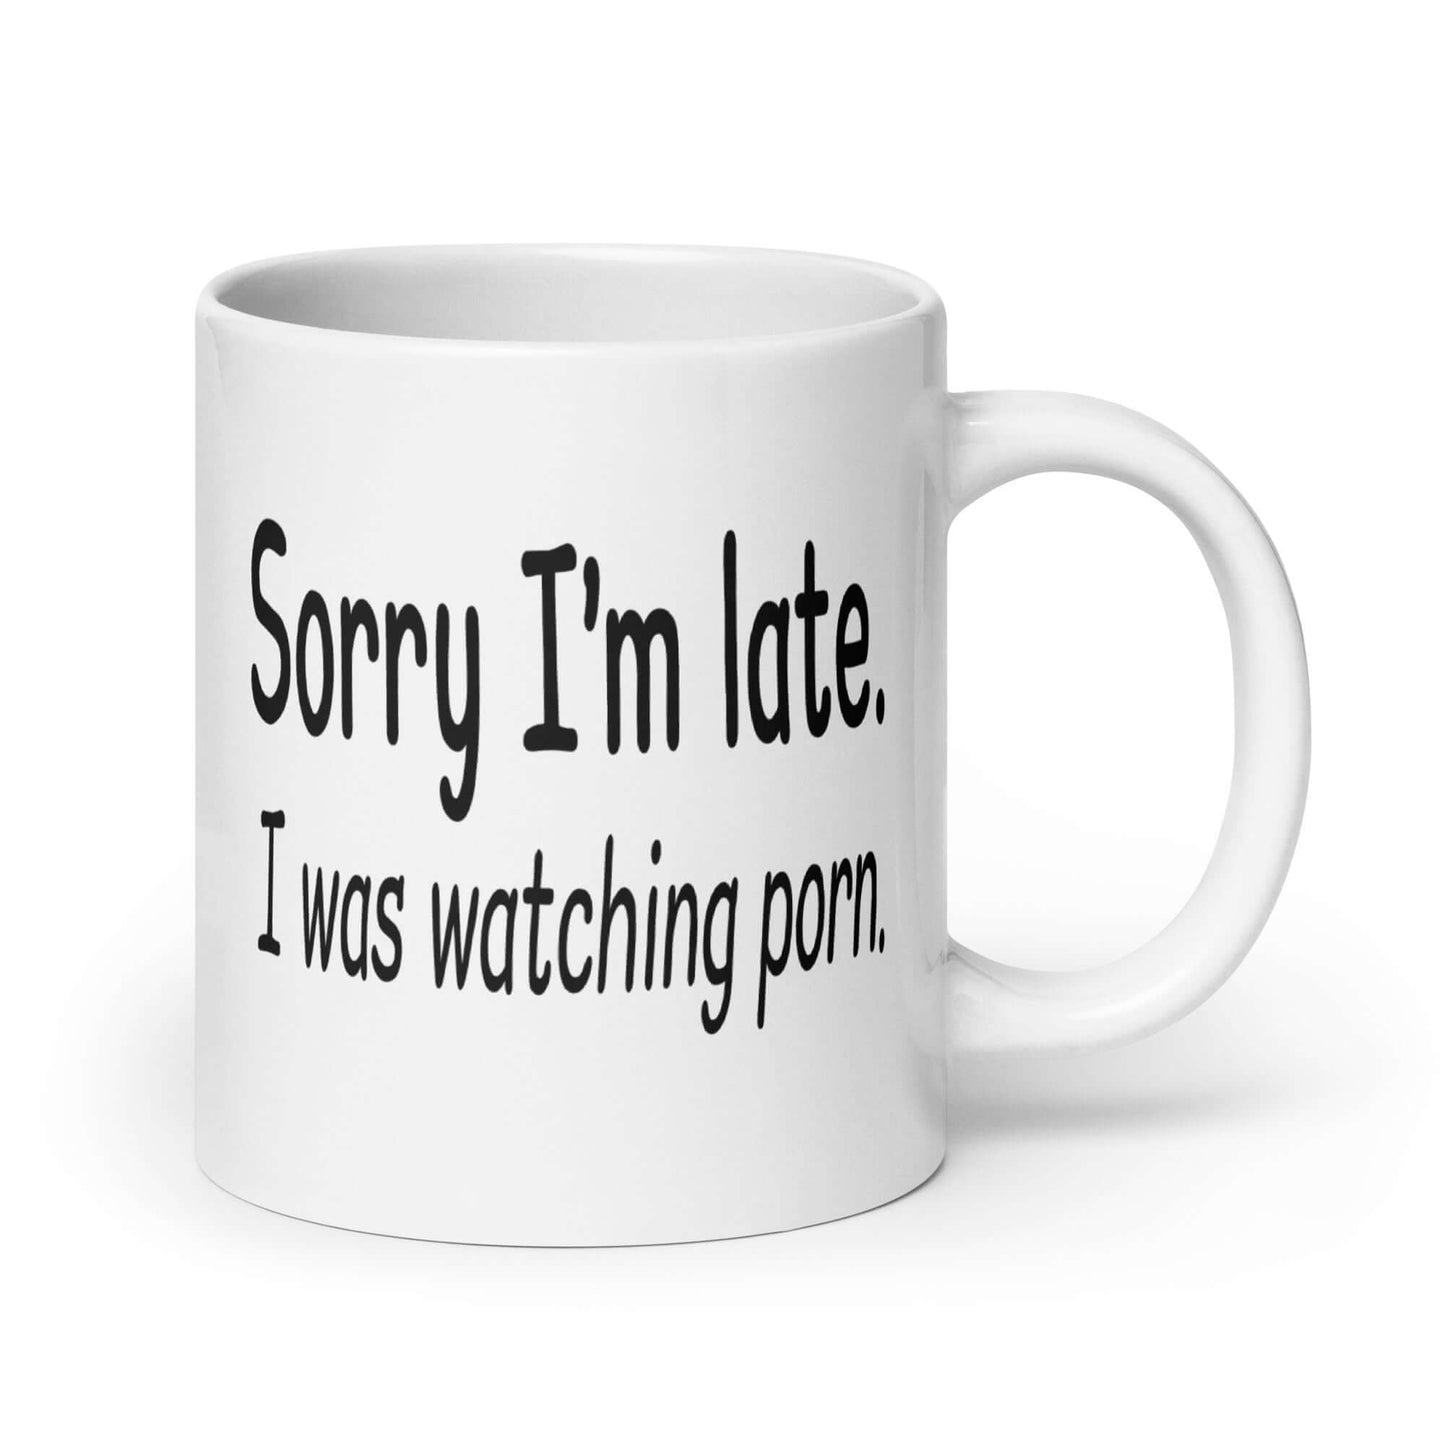 Sorry I'm late I was watching porn funny mug